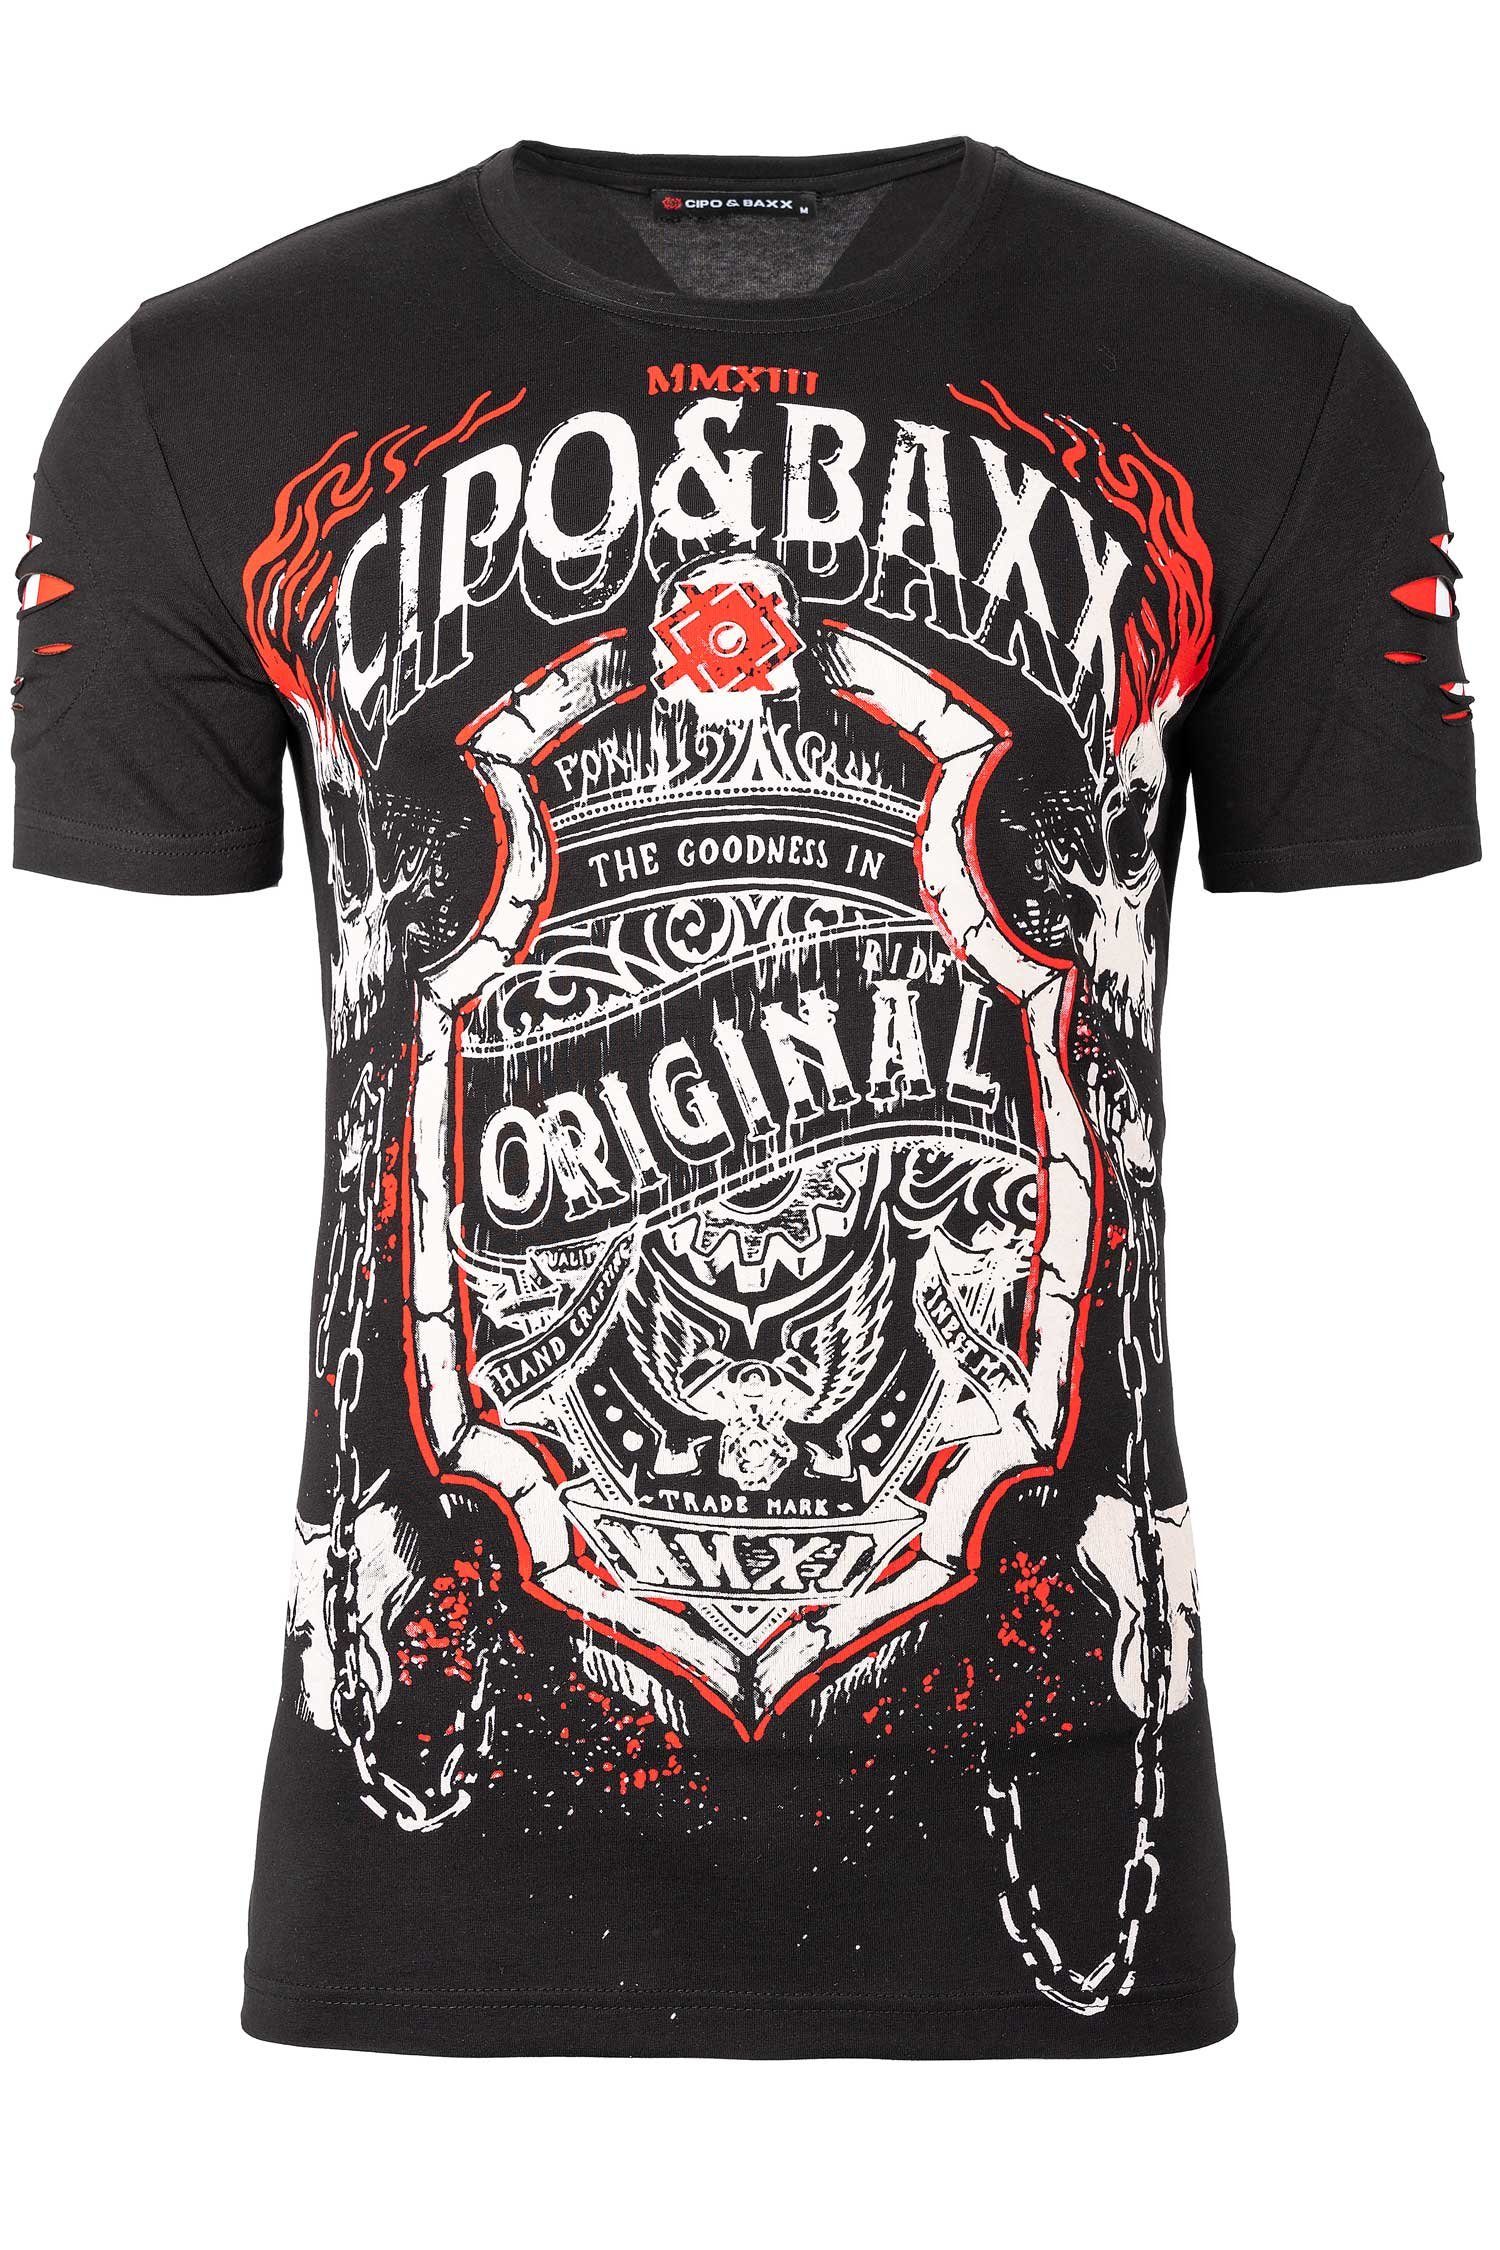 (1-tlg) Style schwarz Print-Shirt Totenkopf mit Extravagantes BA-CT772 Rider T-Shirt Cipo Baxx & Kurzarm im Ghost